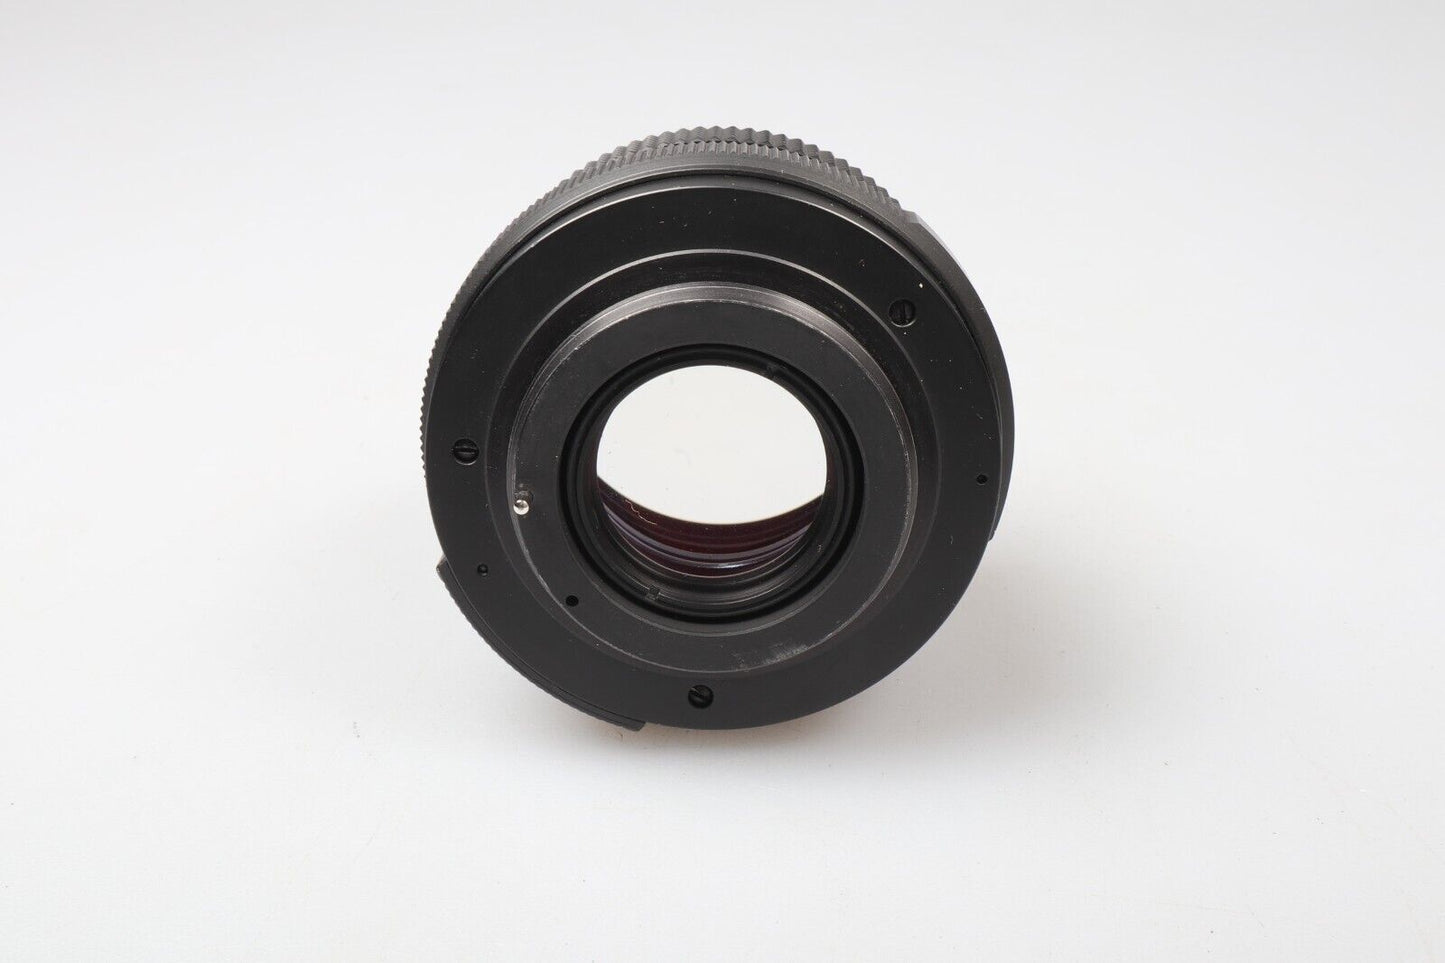 Pentacon Auto Multi Coating Lens | 50mm f/1.8 | M42 Mount